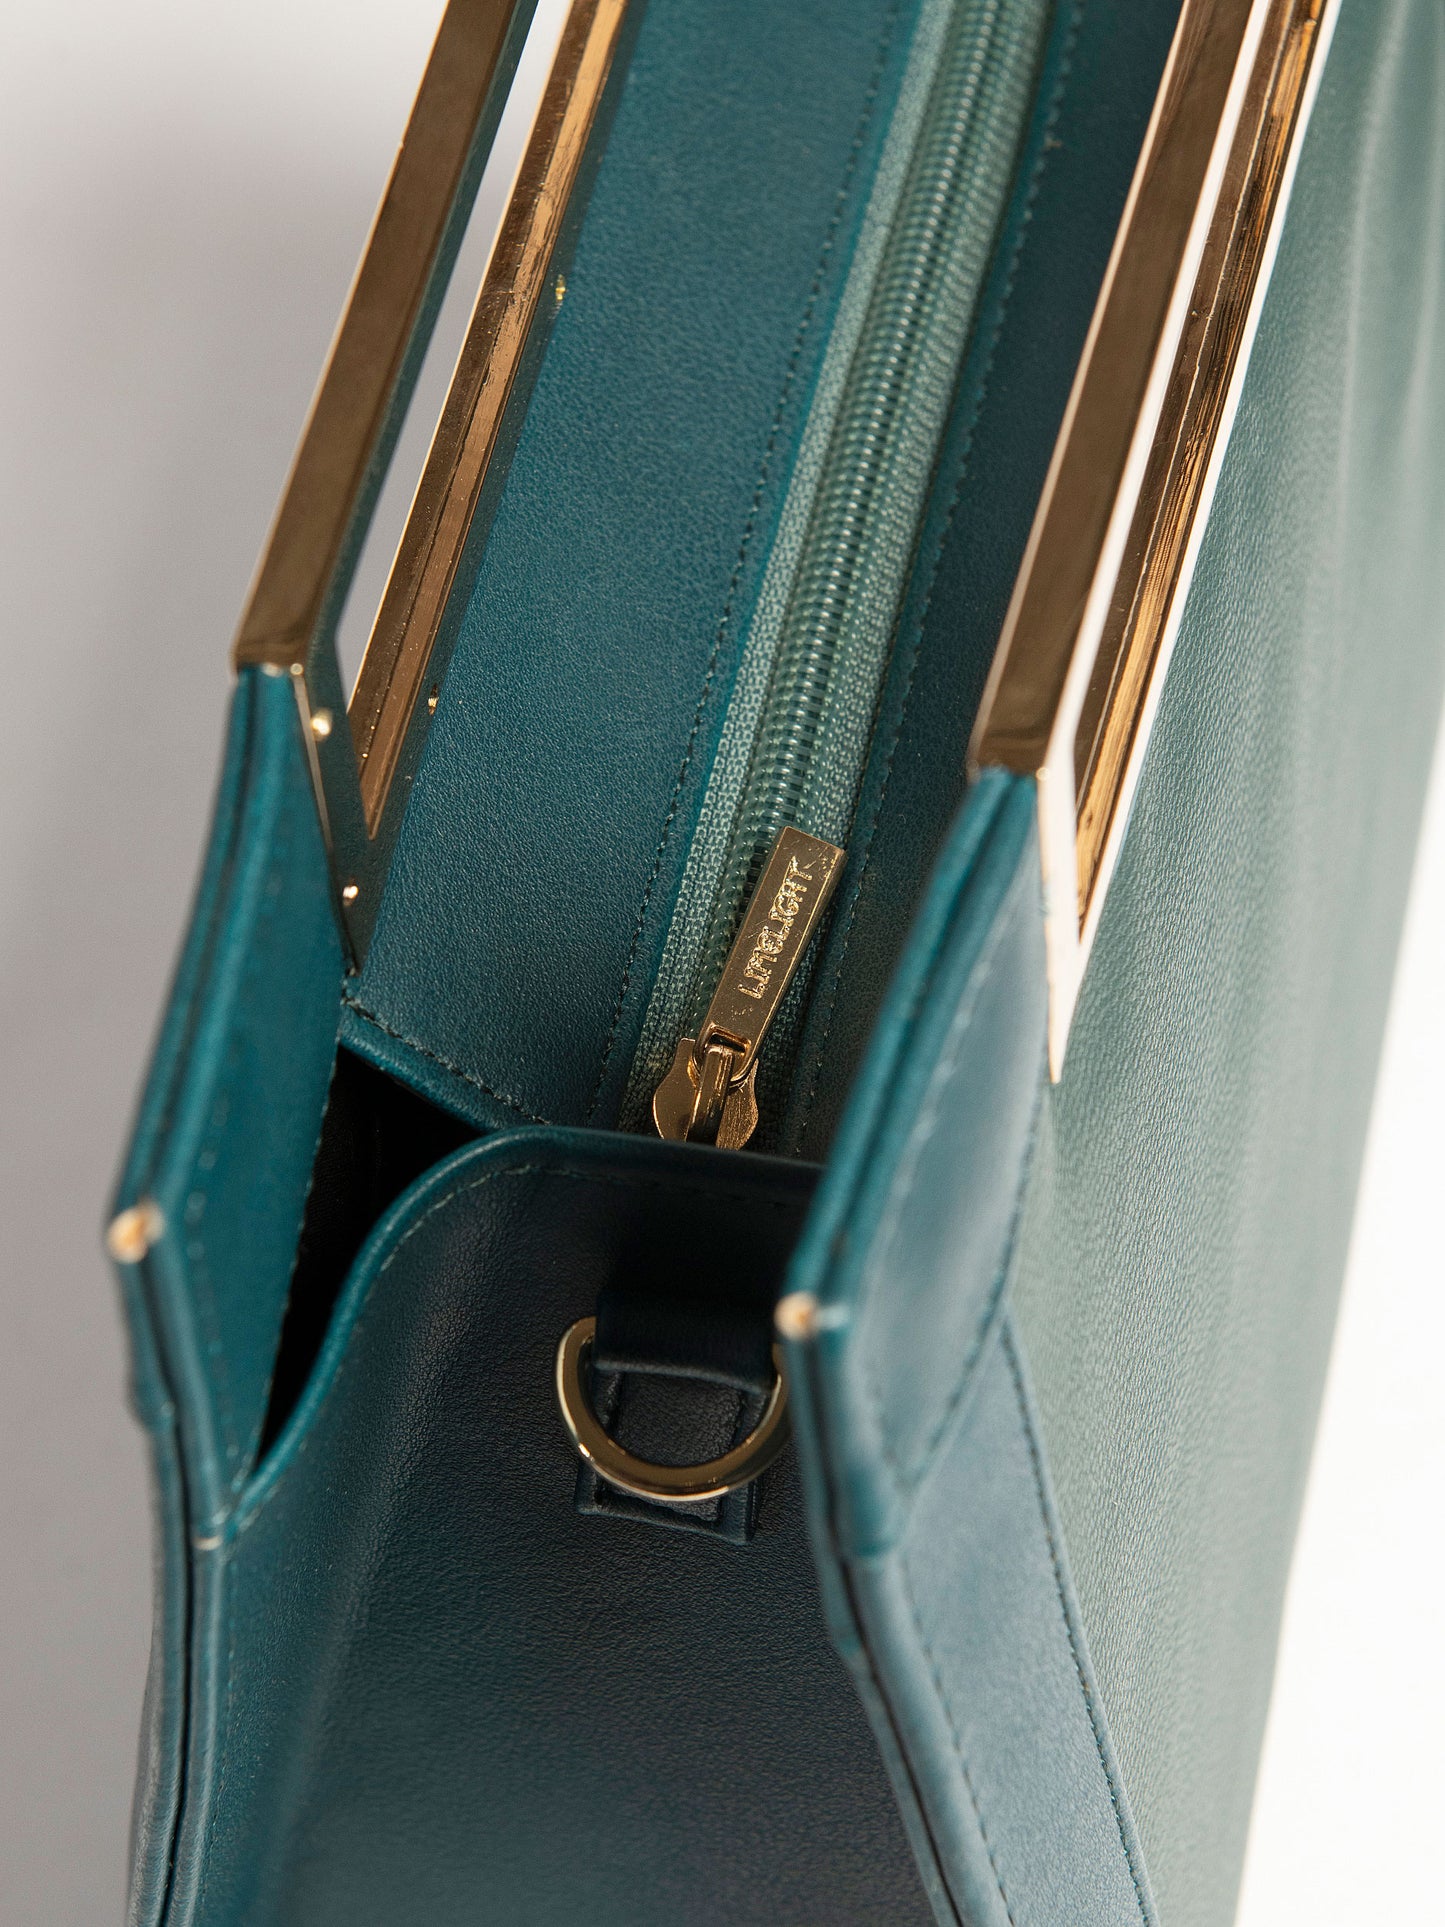 Box Styled Metallic Handbag